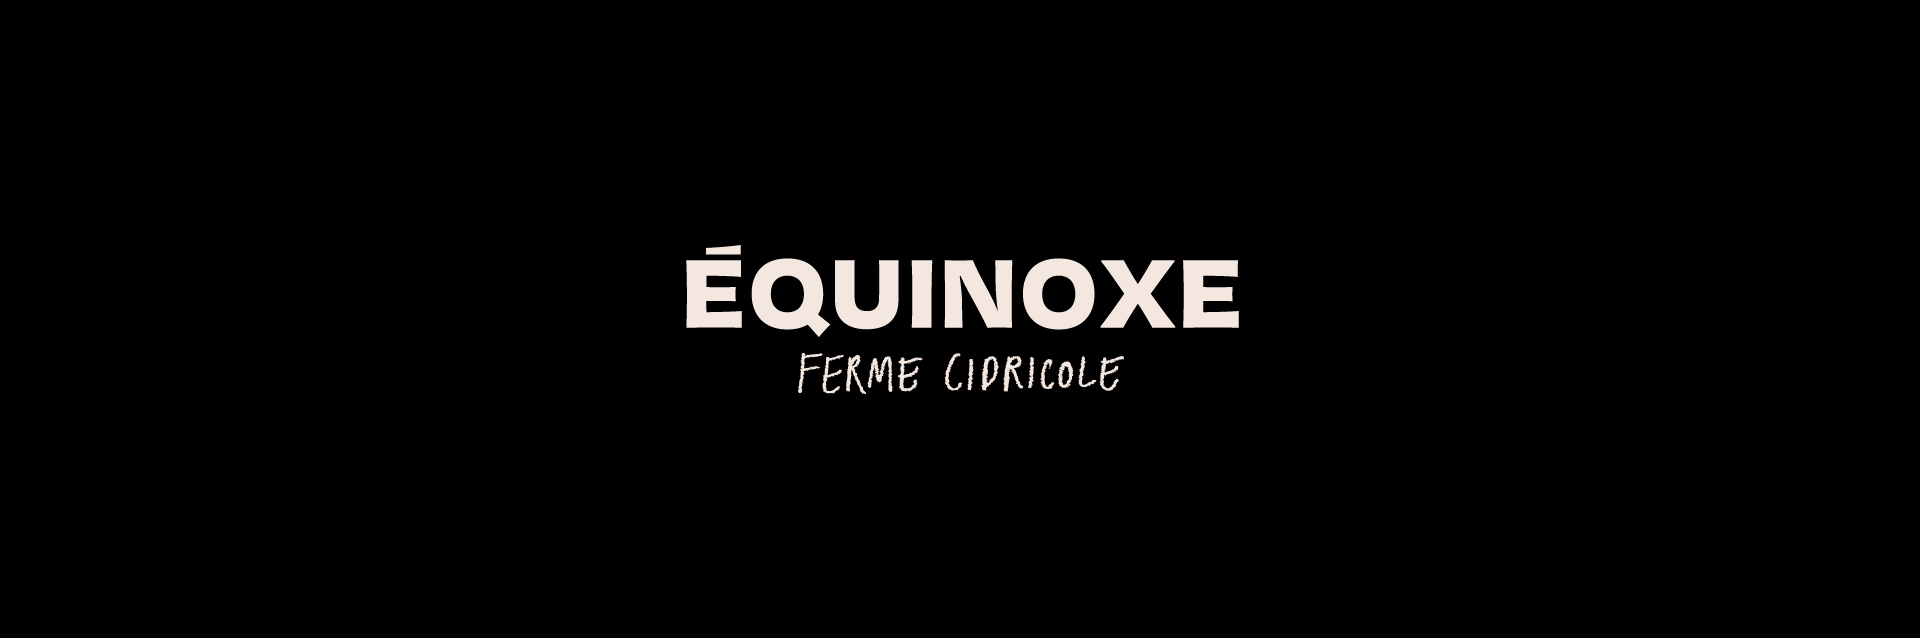 EQUINOXE_IMG_2